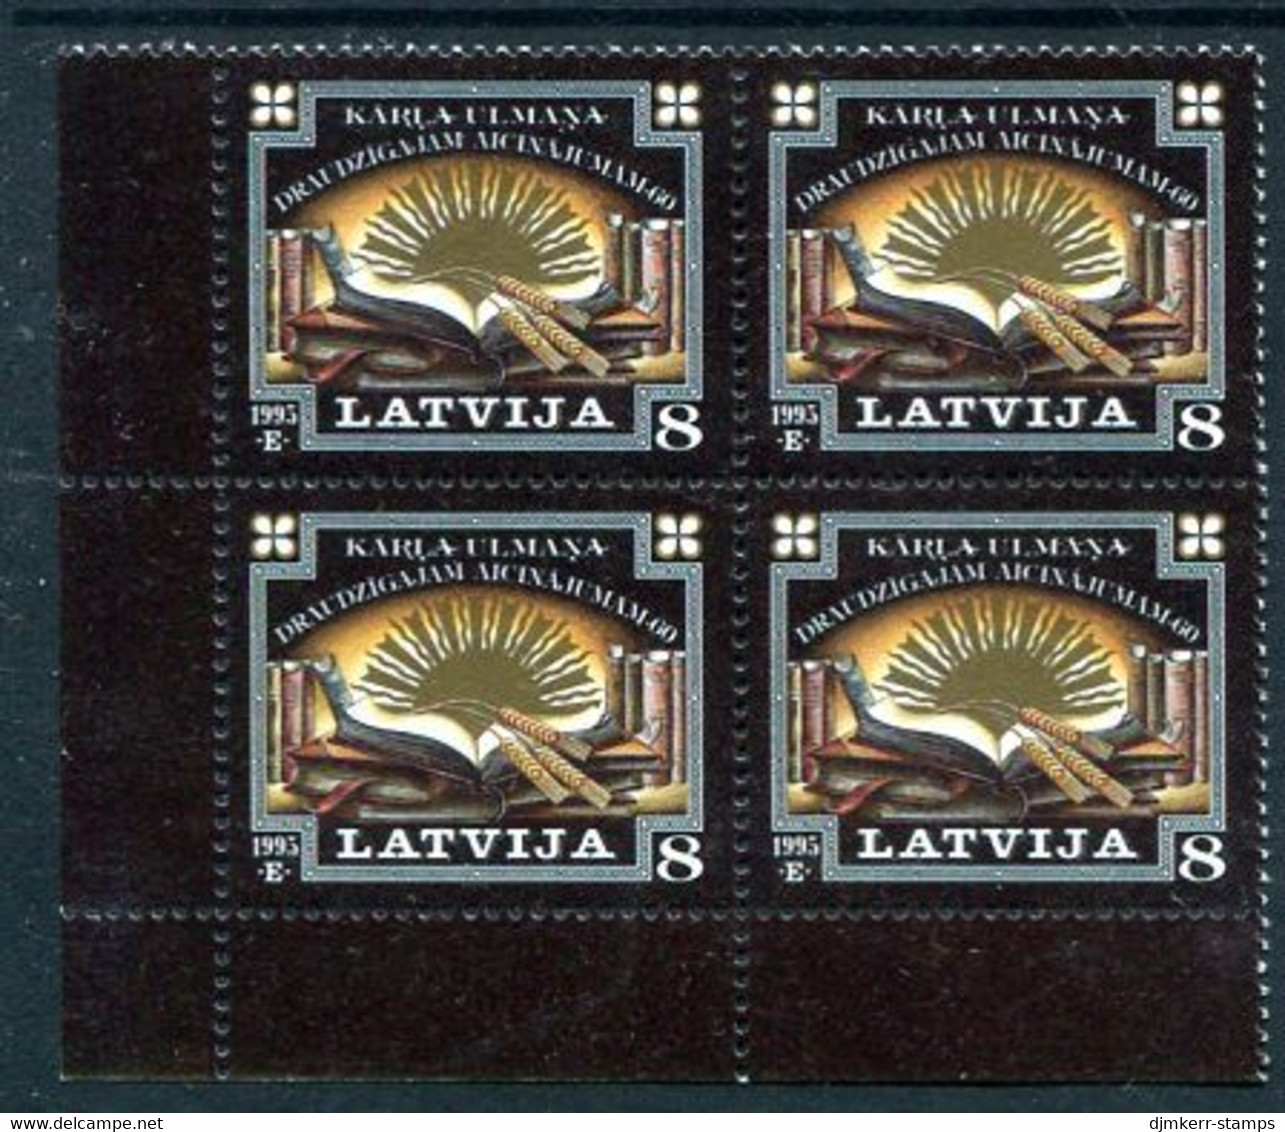 LATVIA 1995 Schools Appeal Block Of 4 MNH / **.  Michel 409 - Latvia